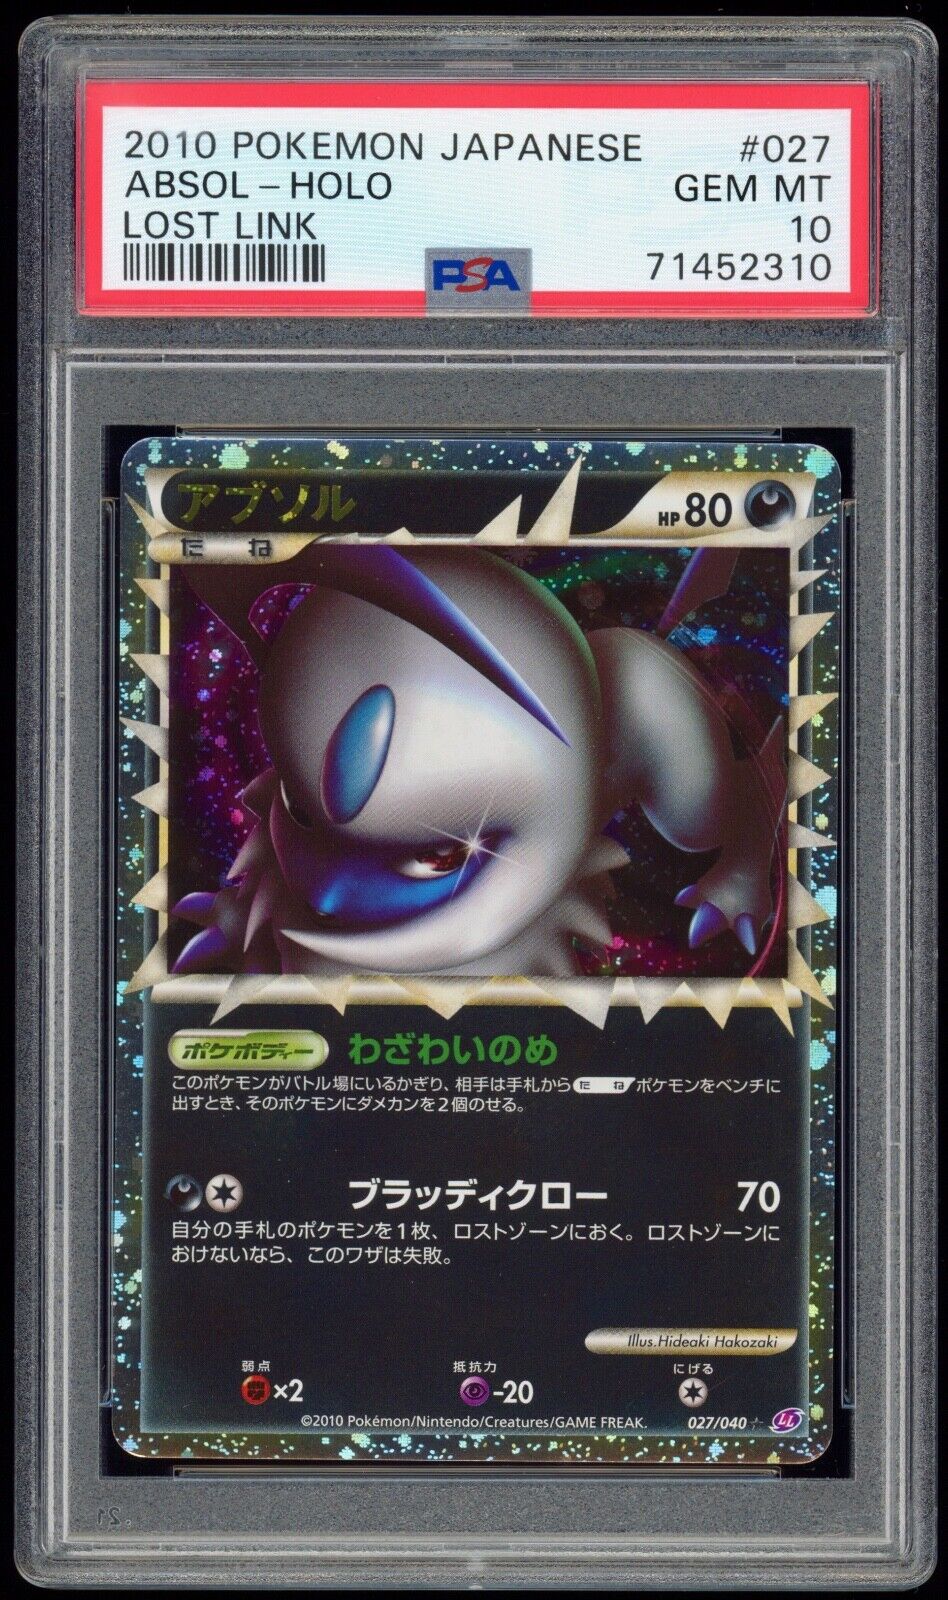 PSA 10 Gem Mint Japanese Absol Prime Holo Lost Link HGSS Pokemon Card 027